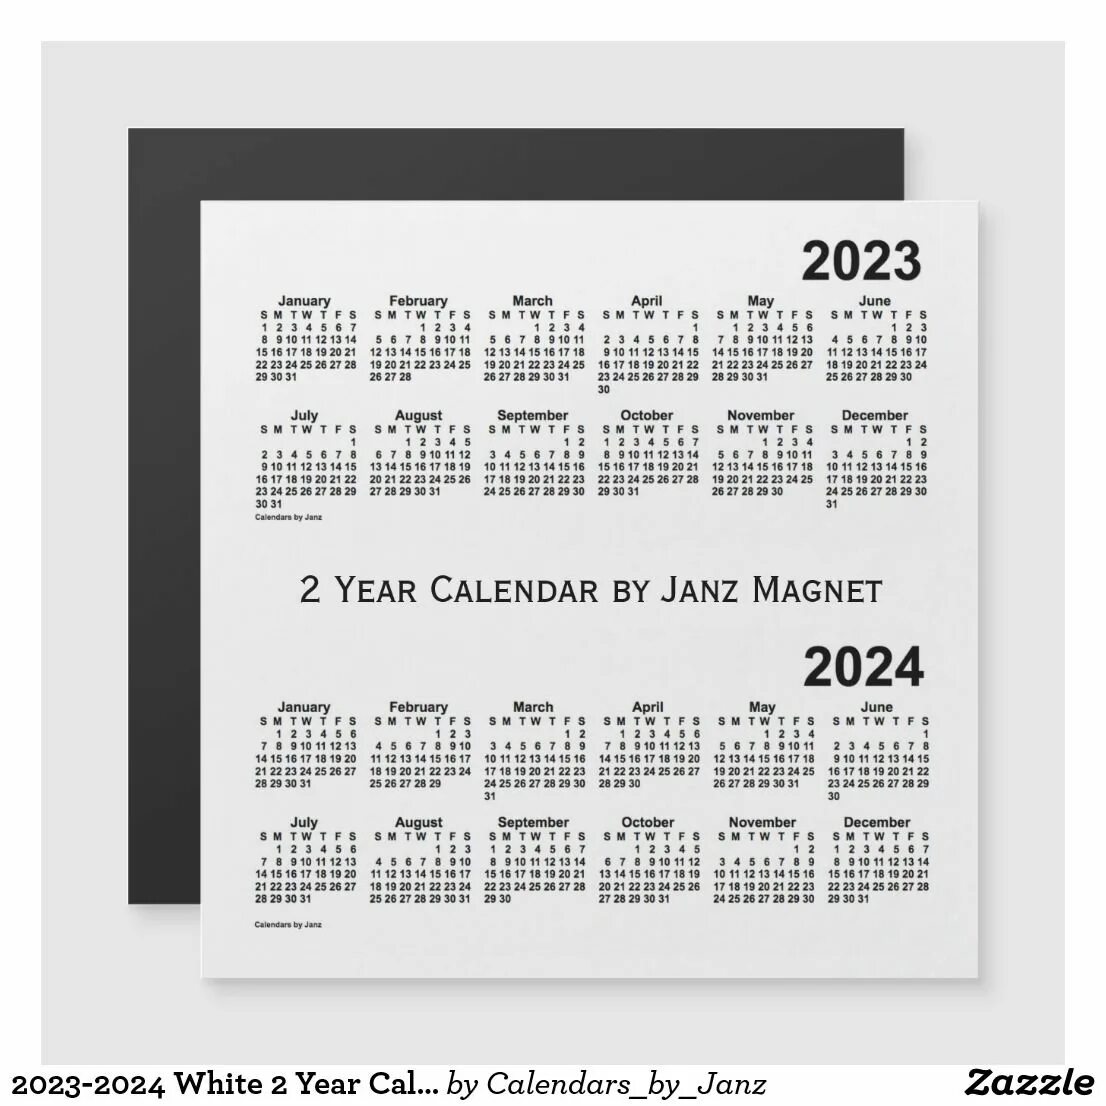 Календарь 2024-2025. Календарь на февраль 2024 года. Календарь на 2025 год. Февраль 2025 календарь. Какой будет январь февраль 2024 года